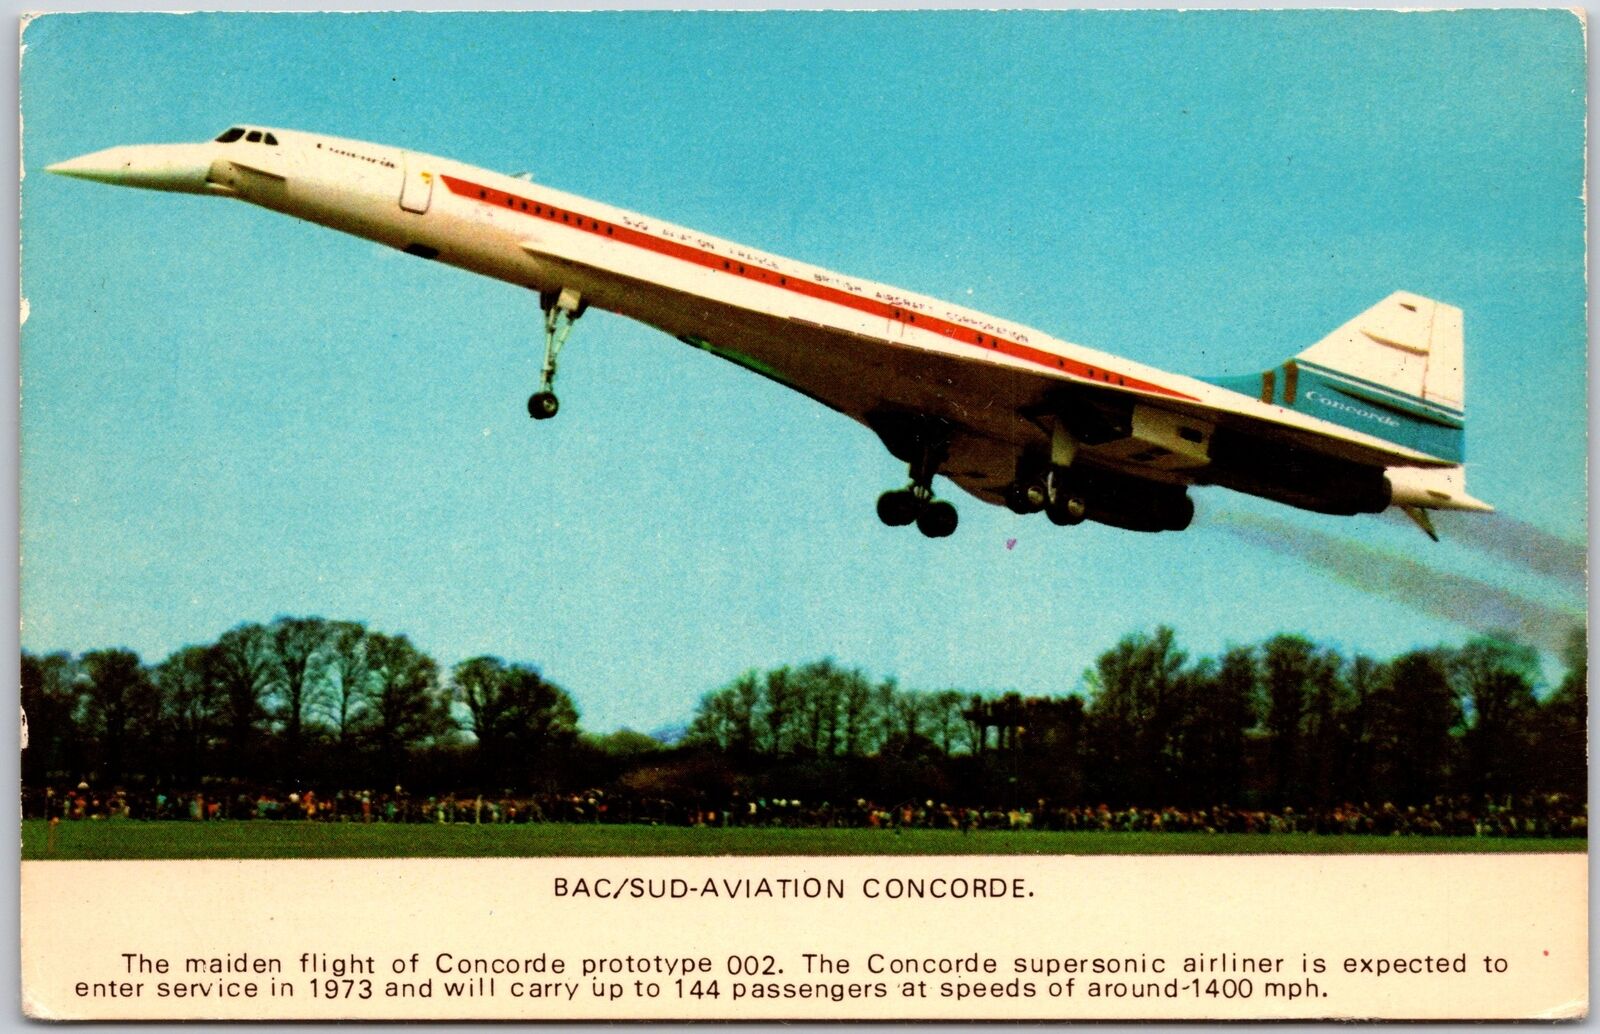 Airplane BAC/SUD-Aviation Concorde Maiden Flight Prototype Supersonic Postcard